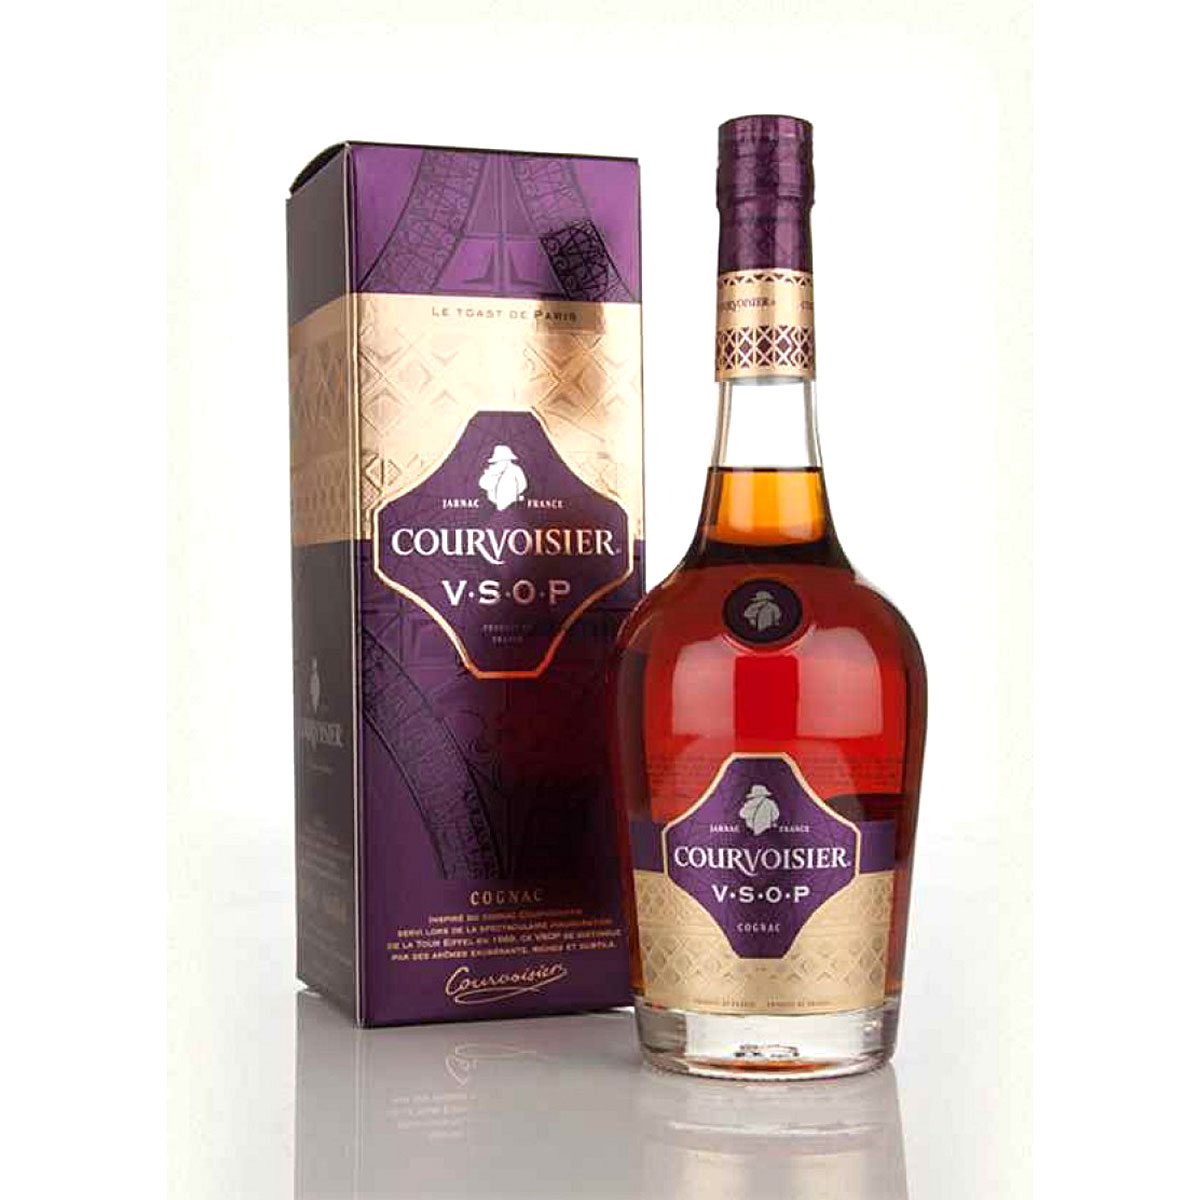 a bottle of courvoisier v.s.o.p cognac